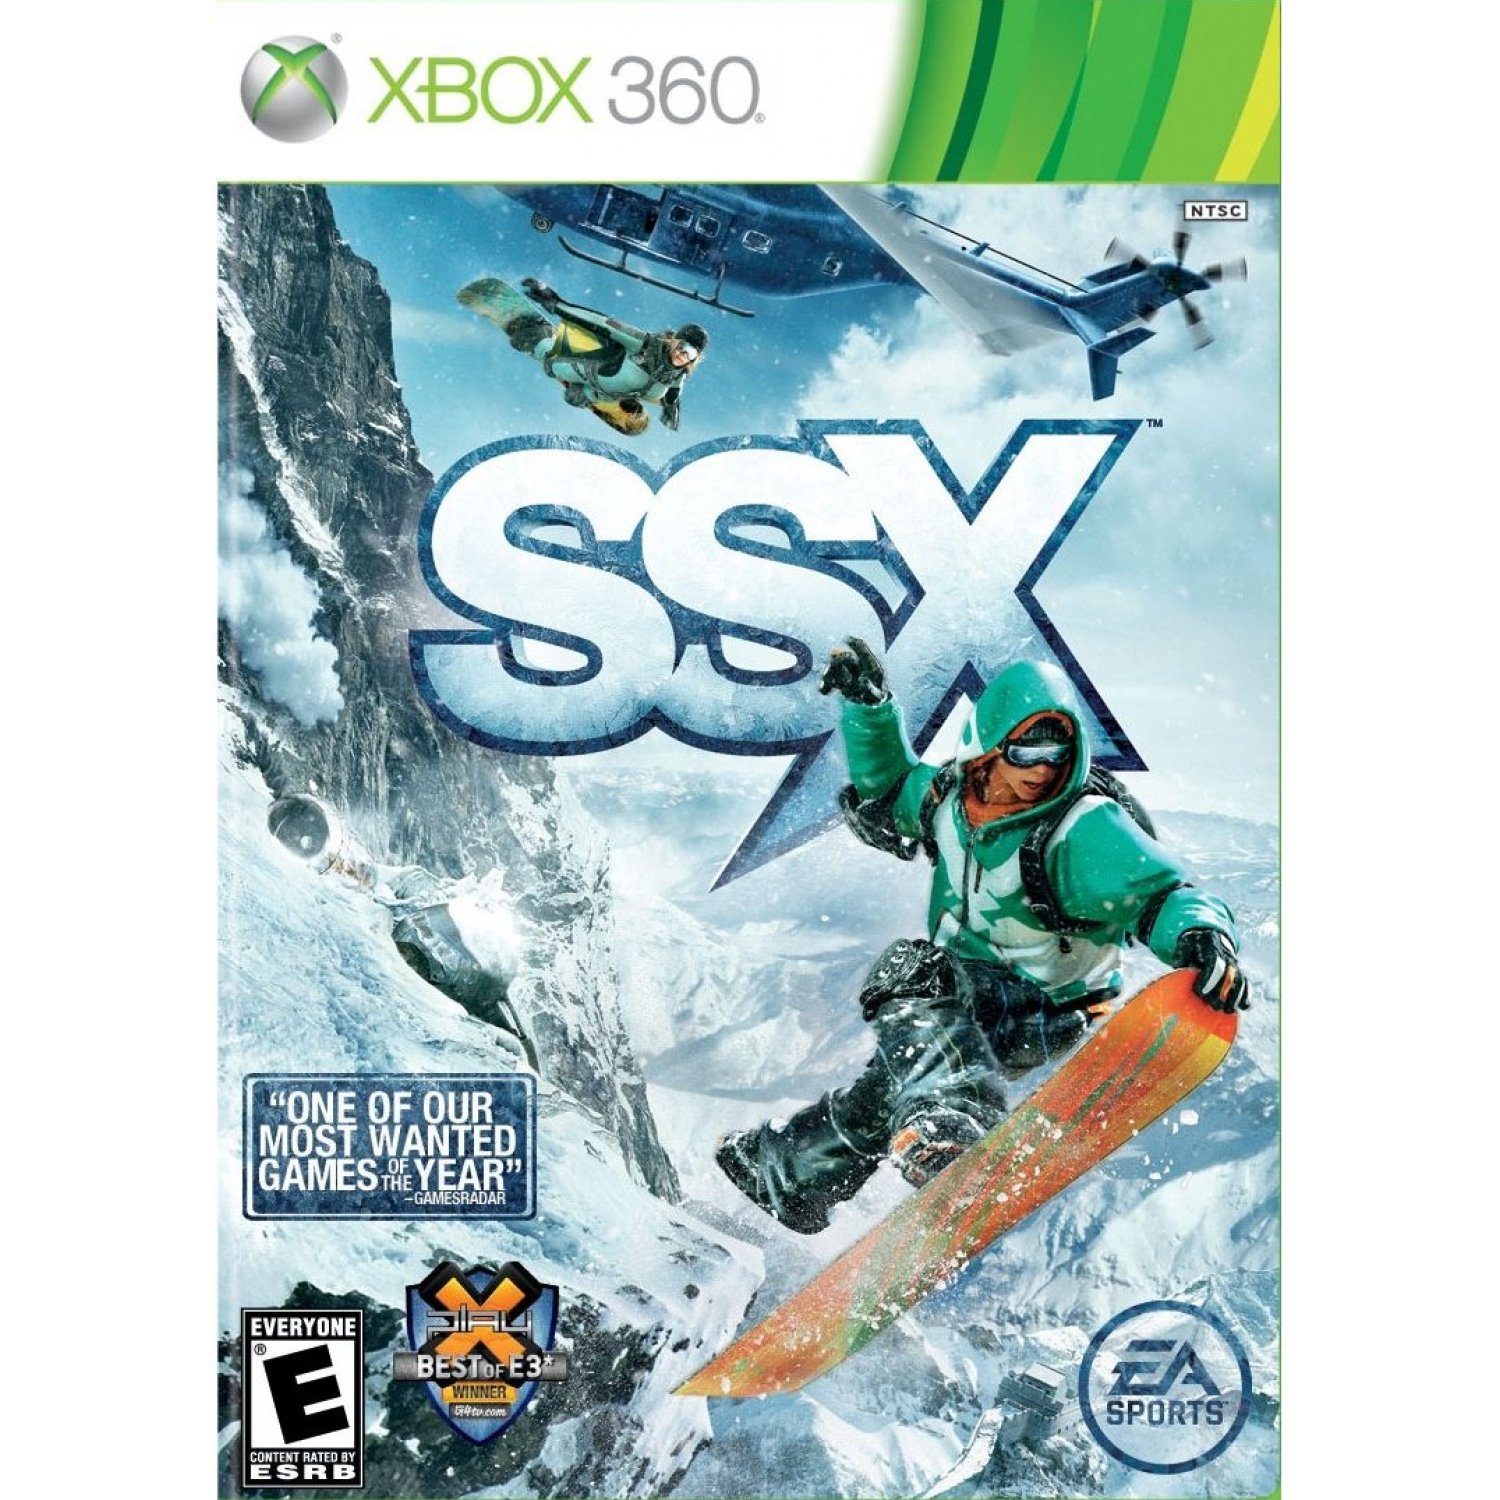 SSX [Xbox 360, английская версия]